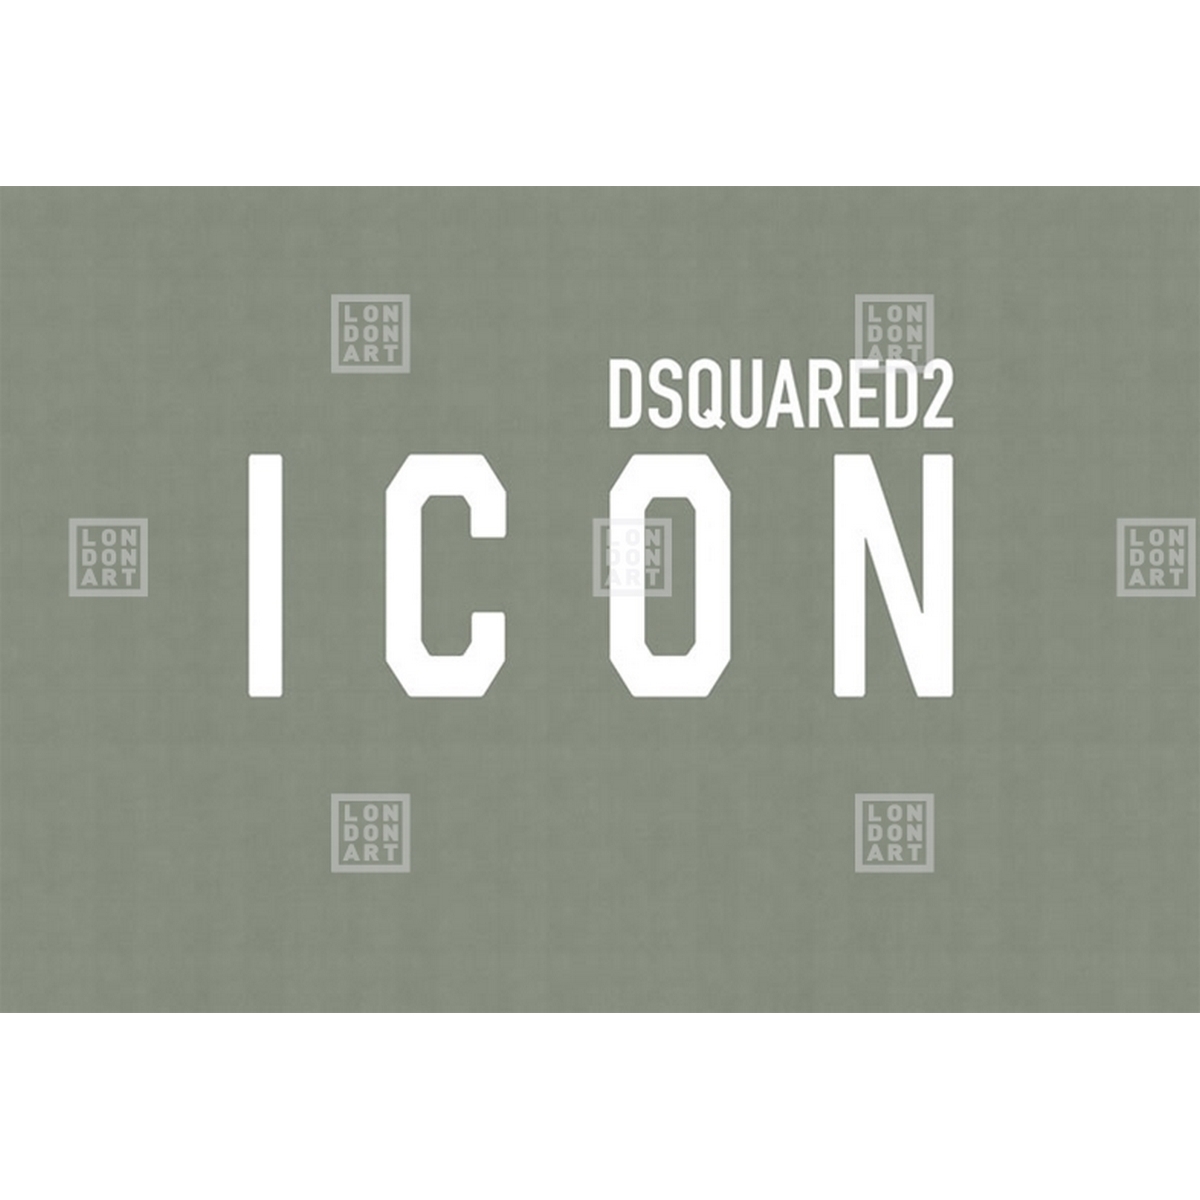 ICON DSQ2W10-02